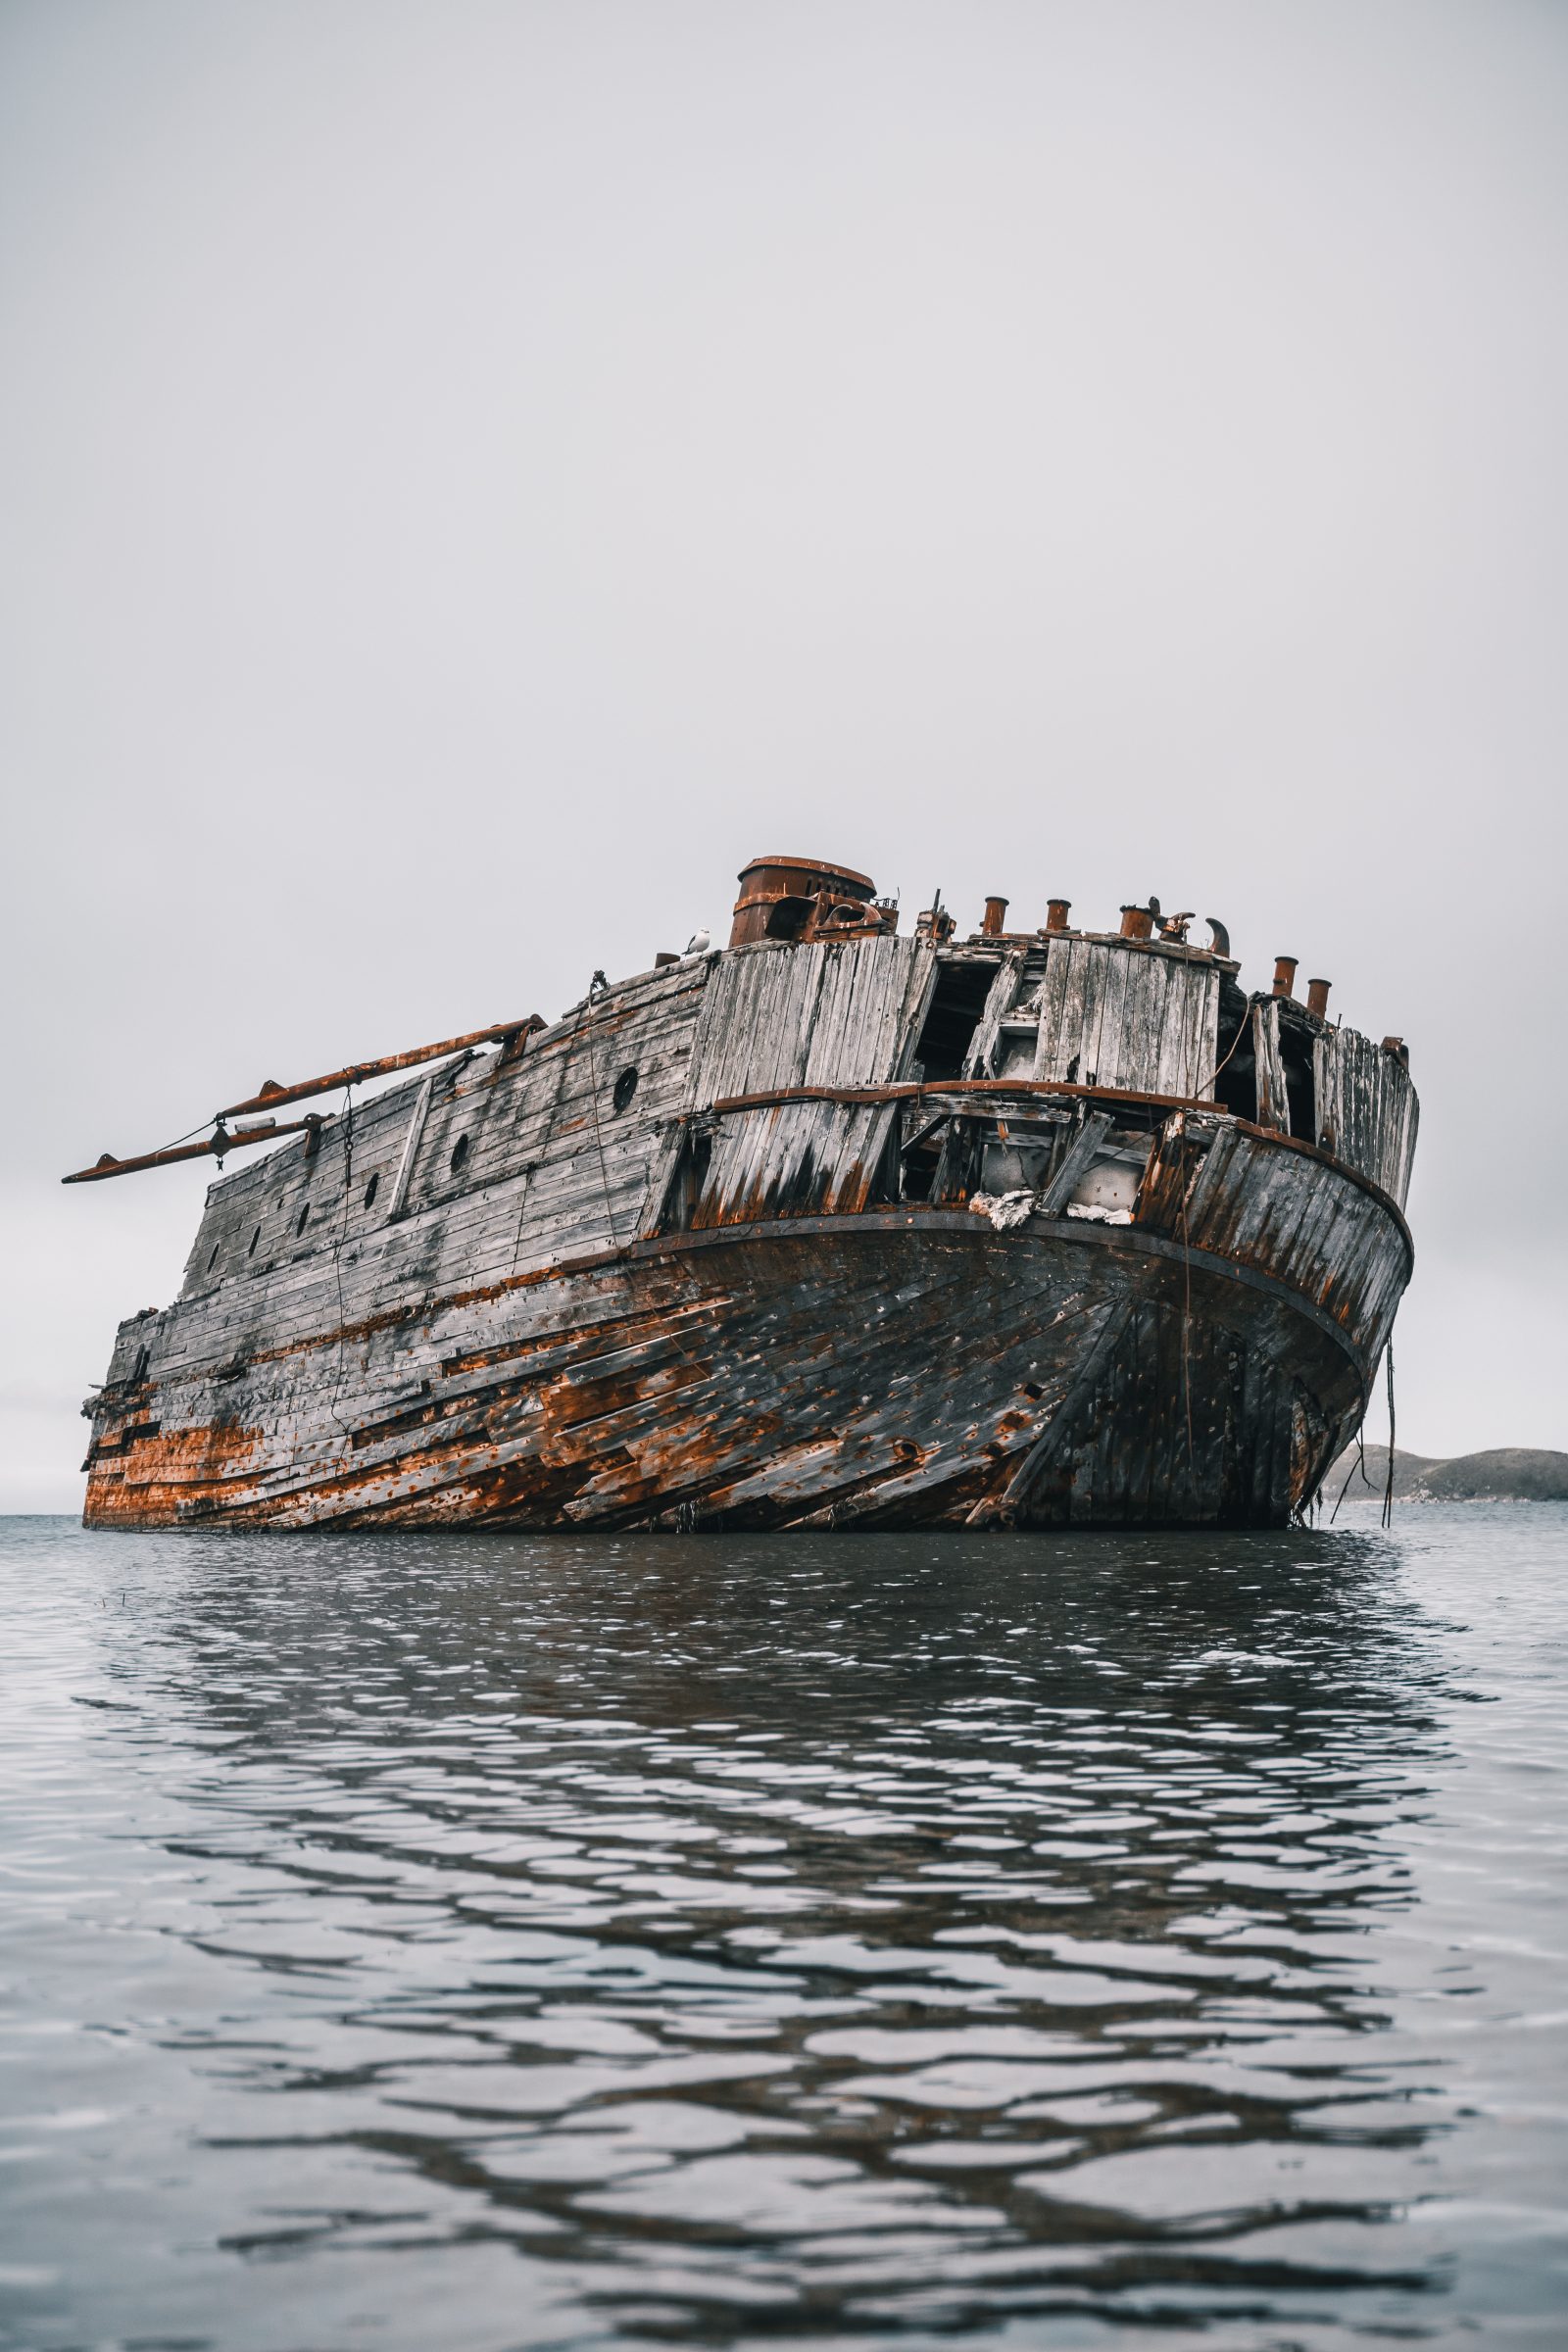 Abandoned boat. Life of Pix